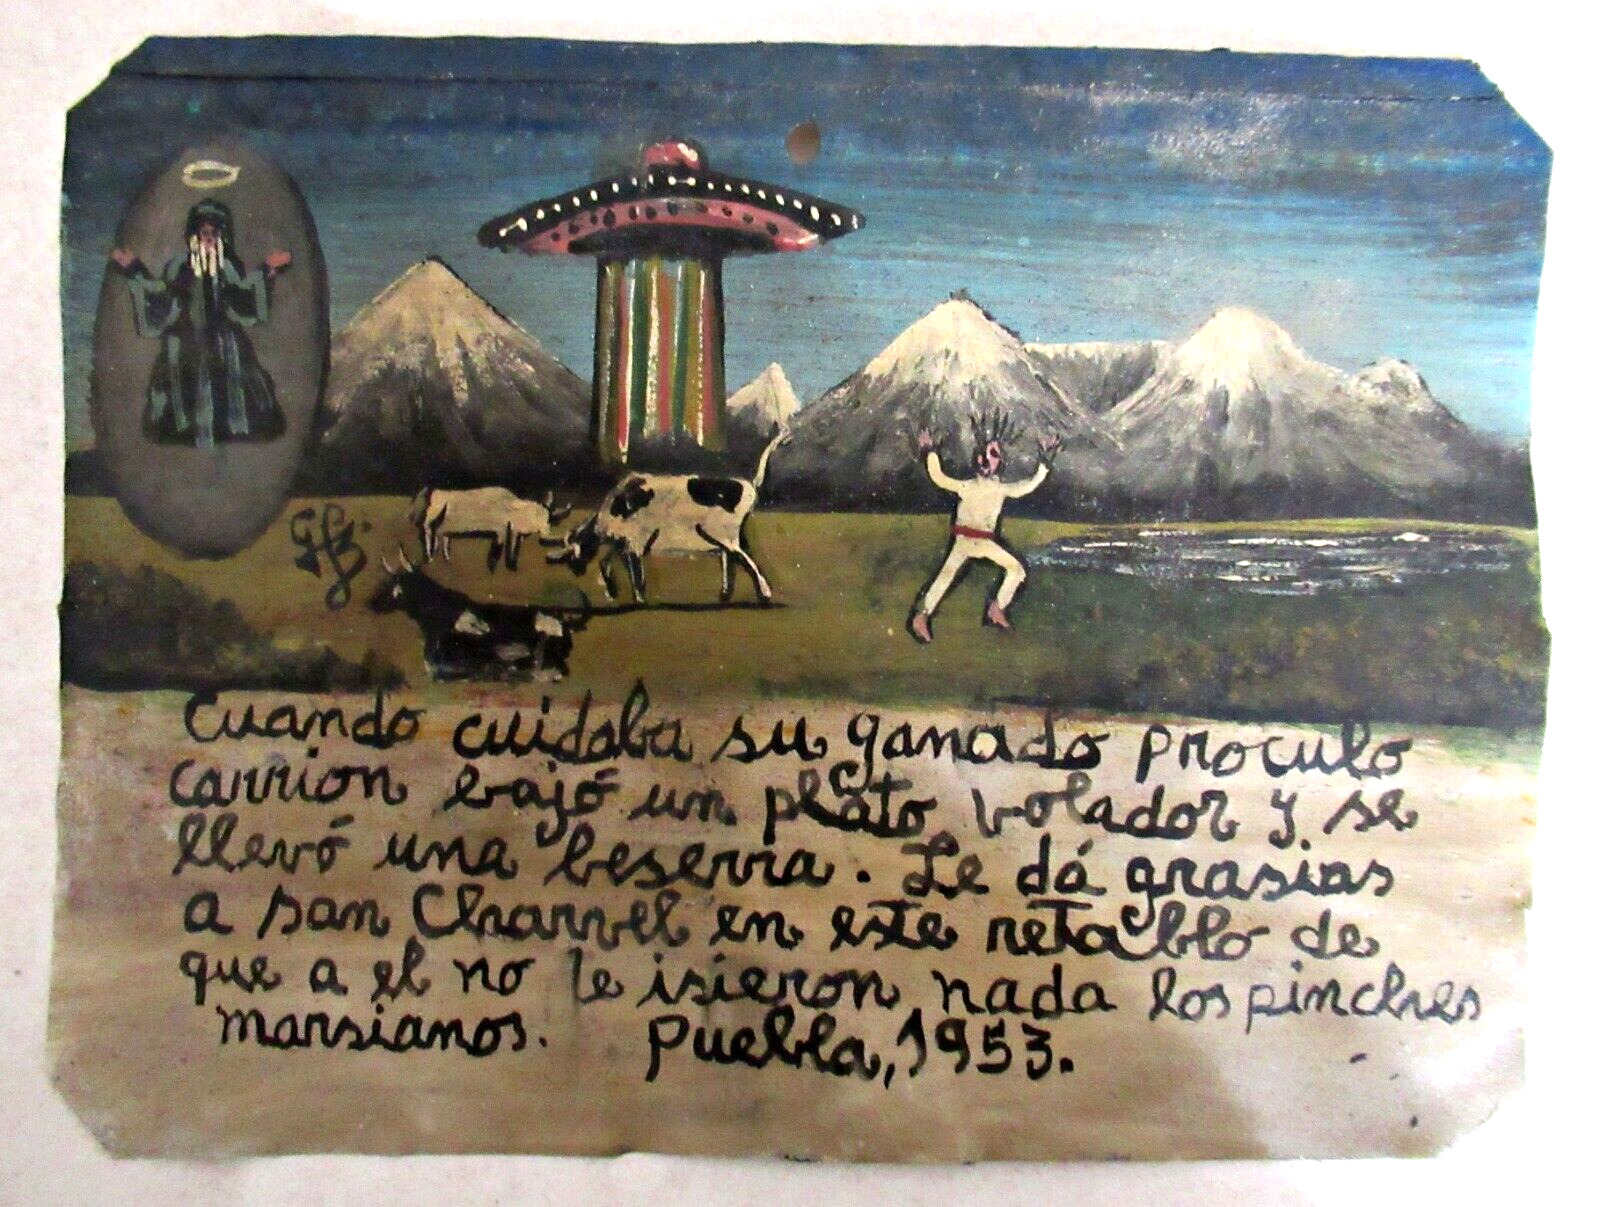 VTG 1953 HP MEXICAN TIN RETABLO SAN CHARBEL SAVE MAN FROM FLYING SAUCER MARTIANS